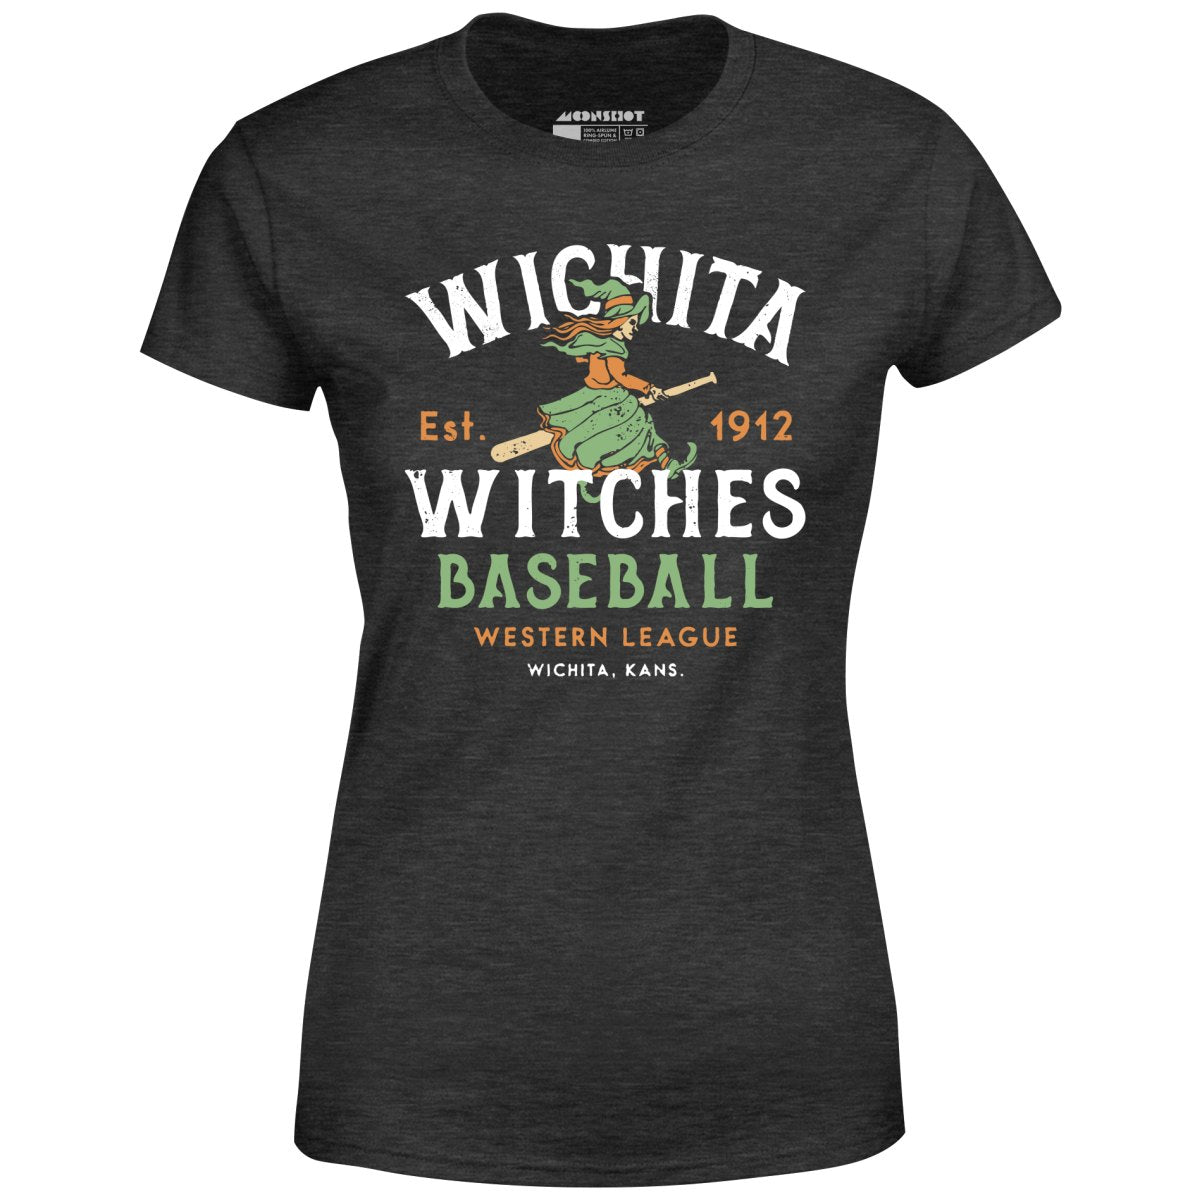 Wichita Witches - Kansas - Vintage Defunct Baseball Teams - Women's T-Shirt